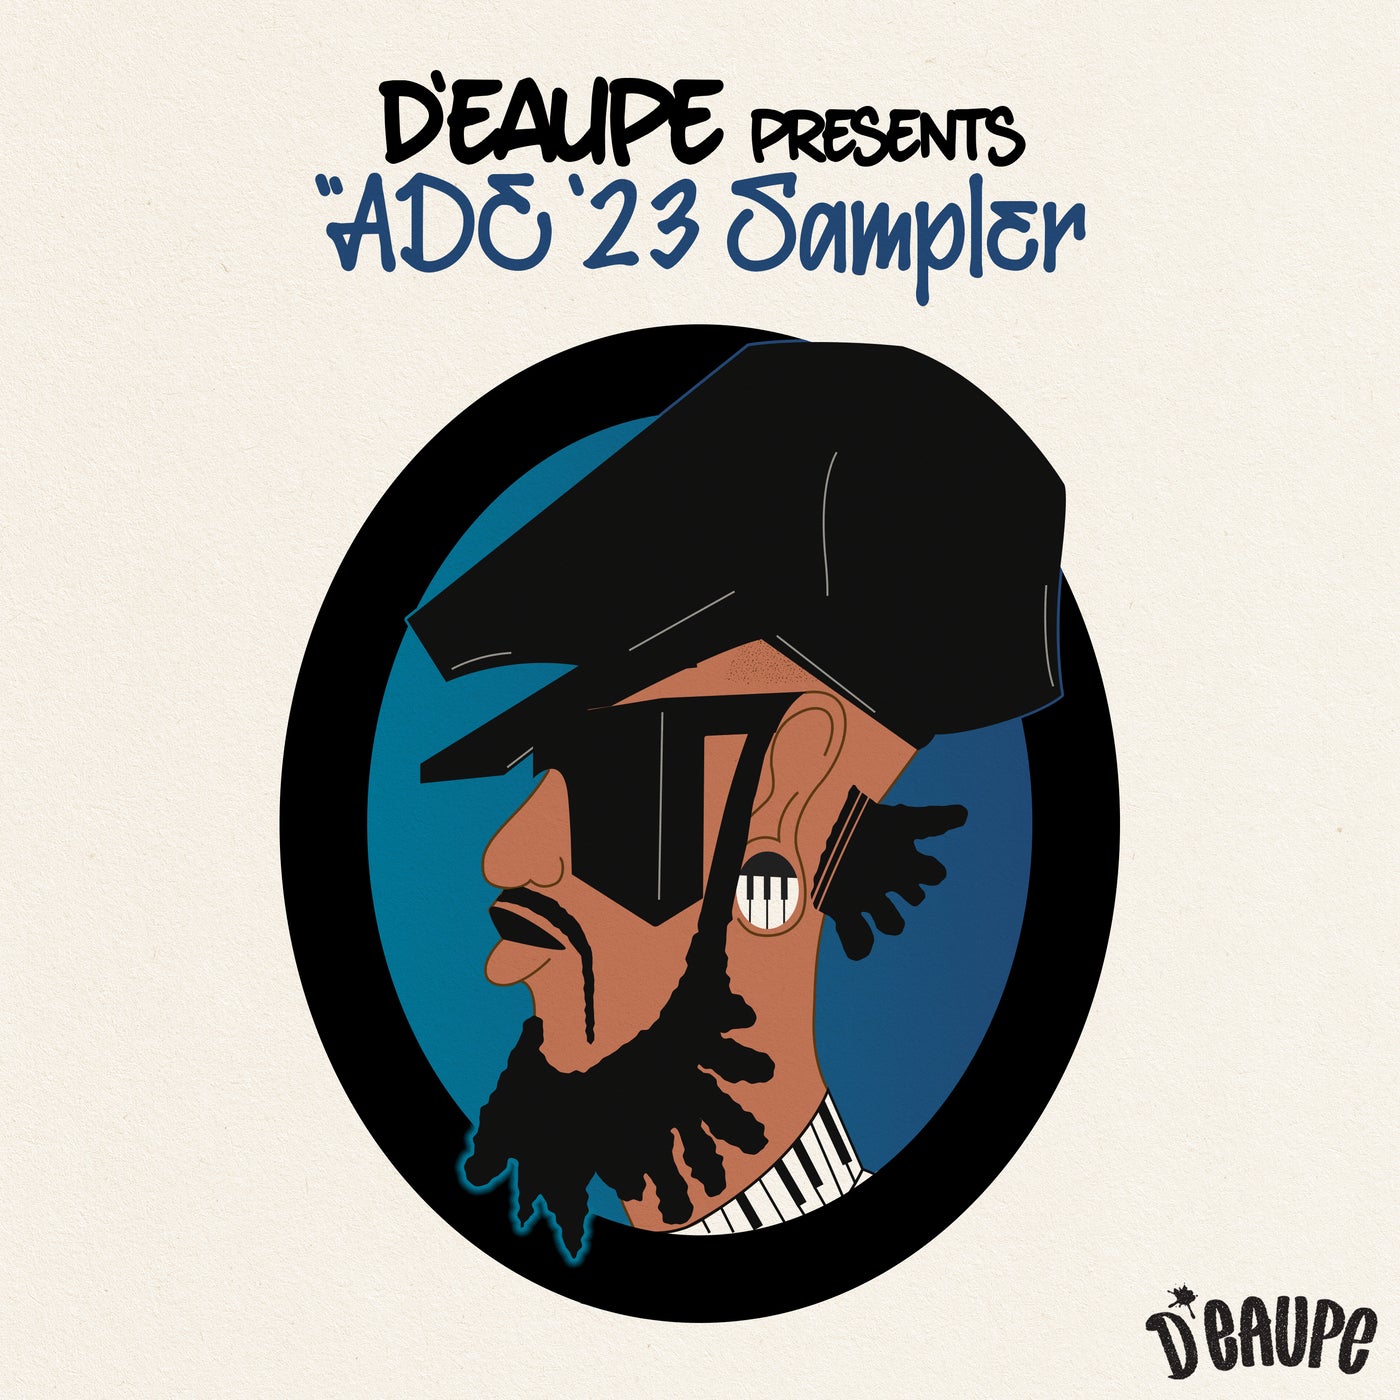 D'EAUPE presents ADE'23 Sampler